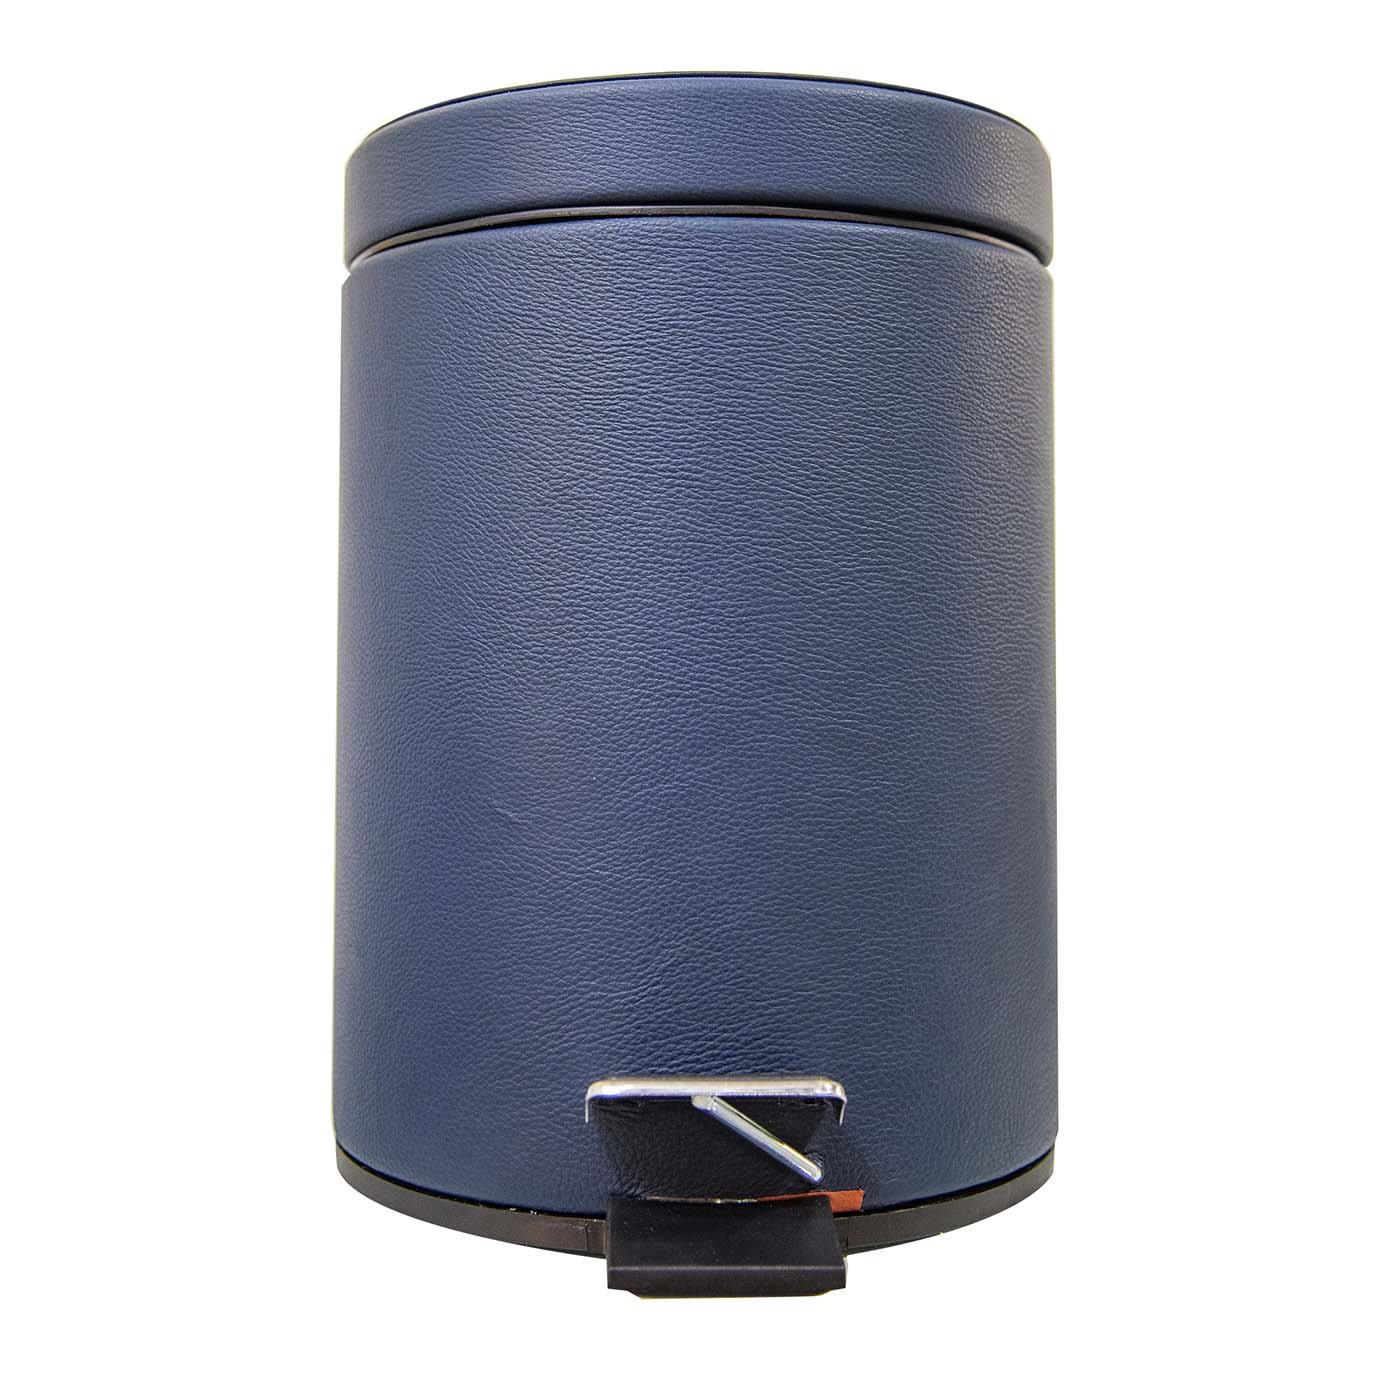 Leather Bin with Lid in Blue - Cassigoli